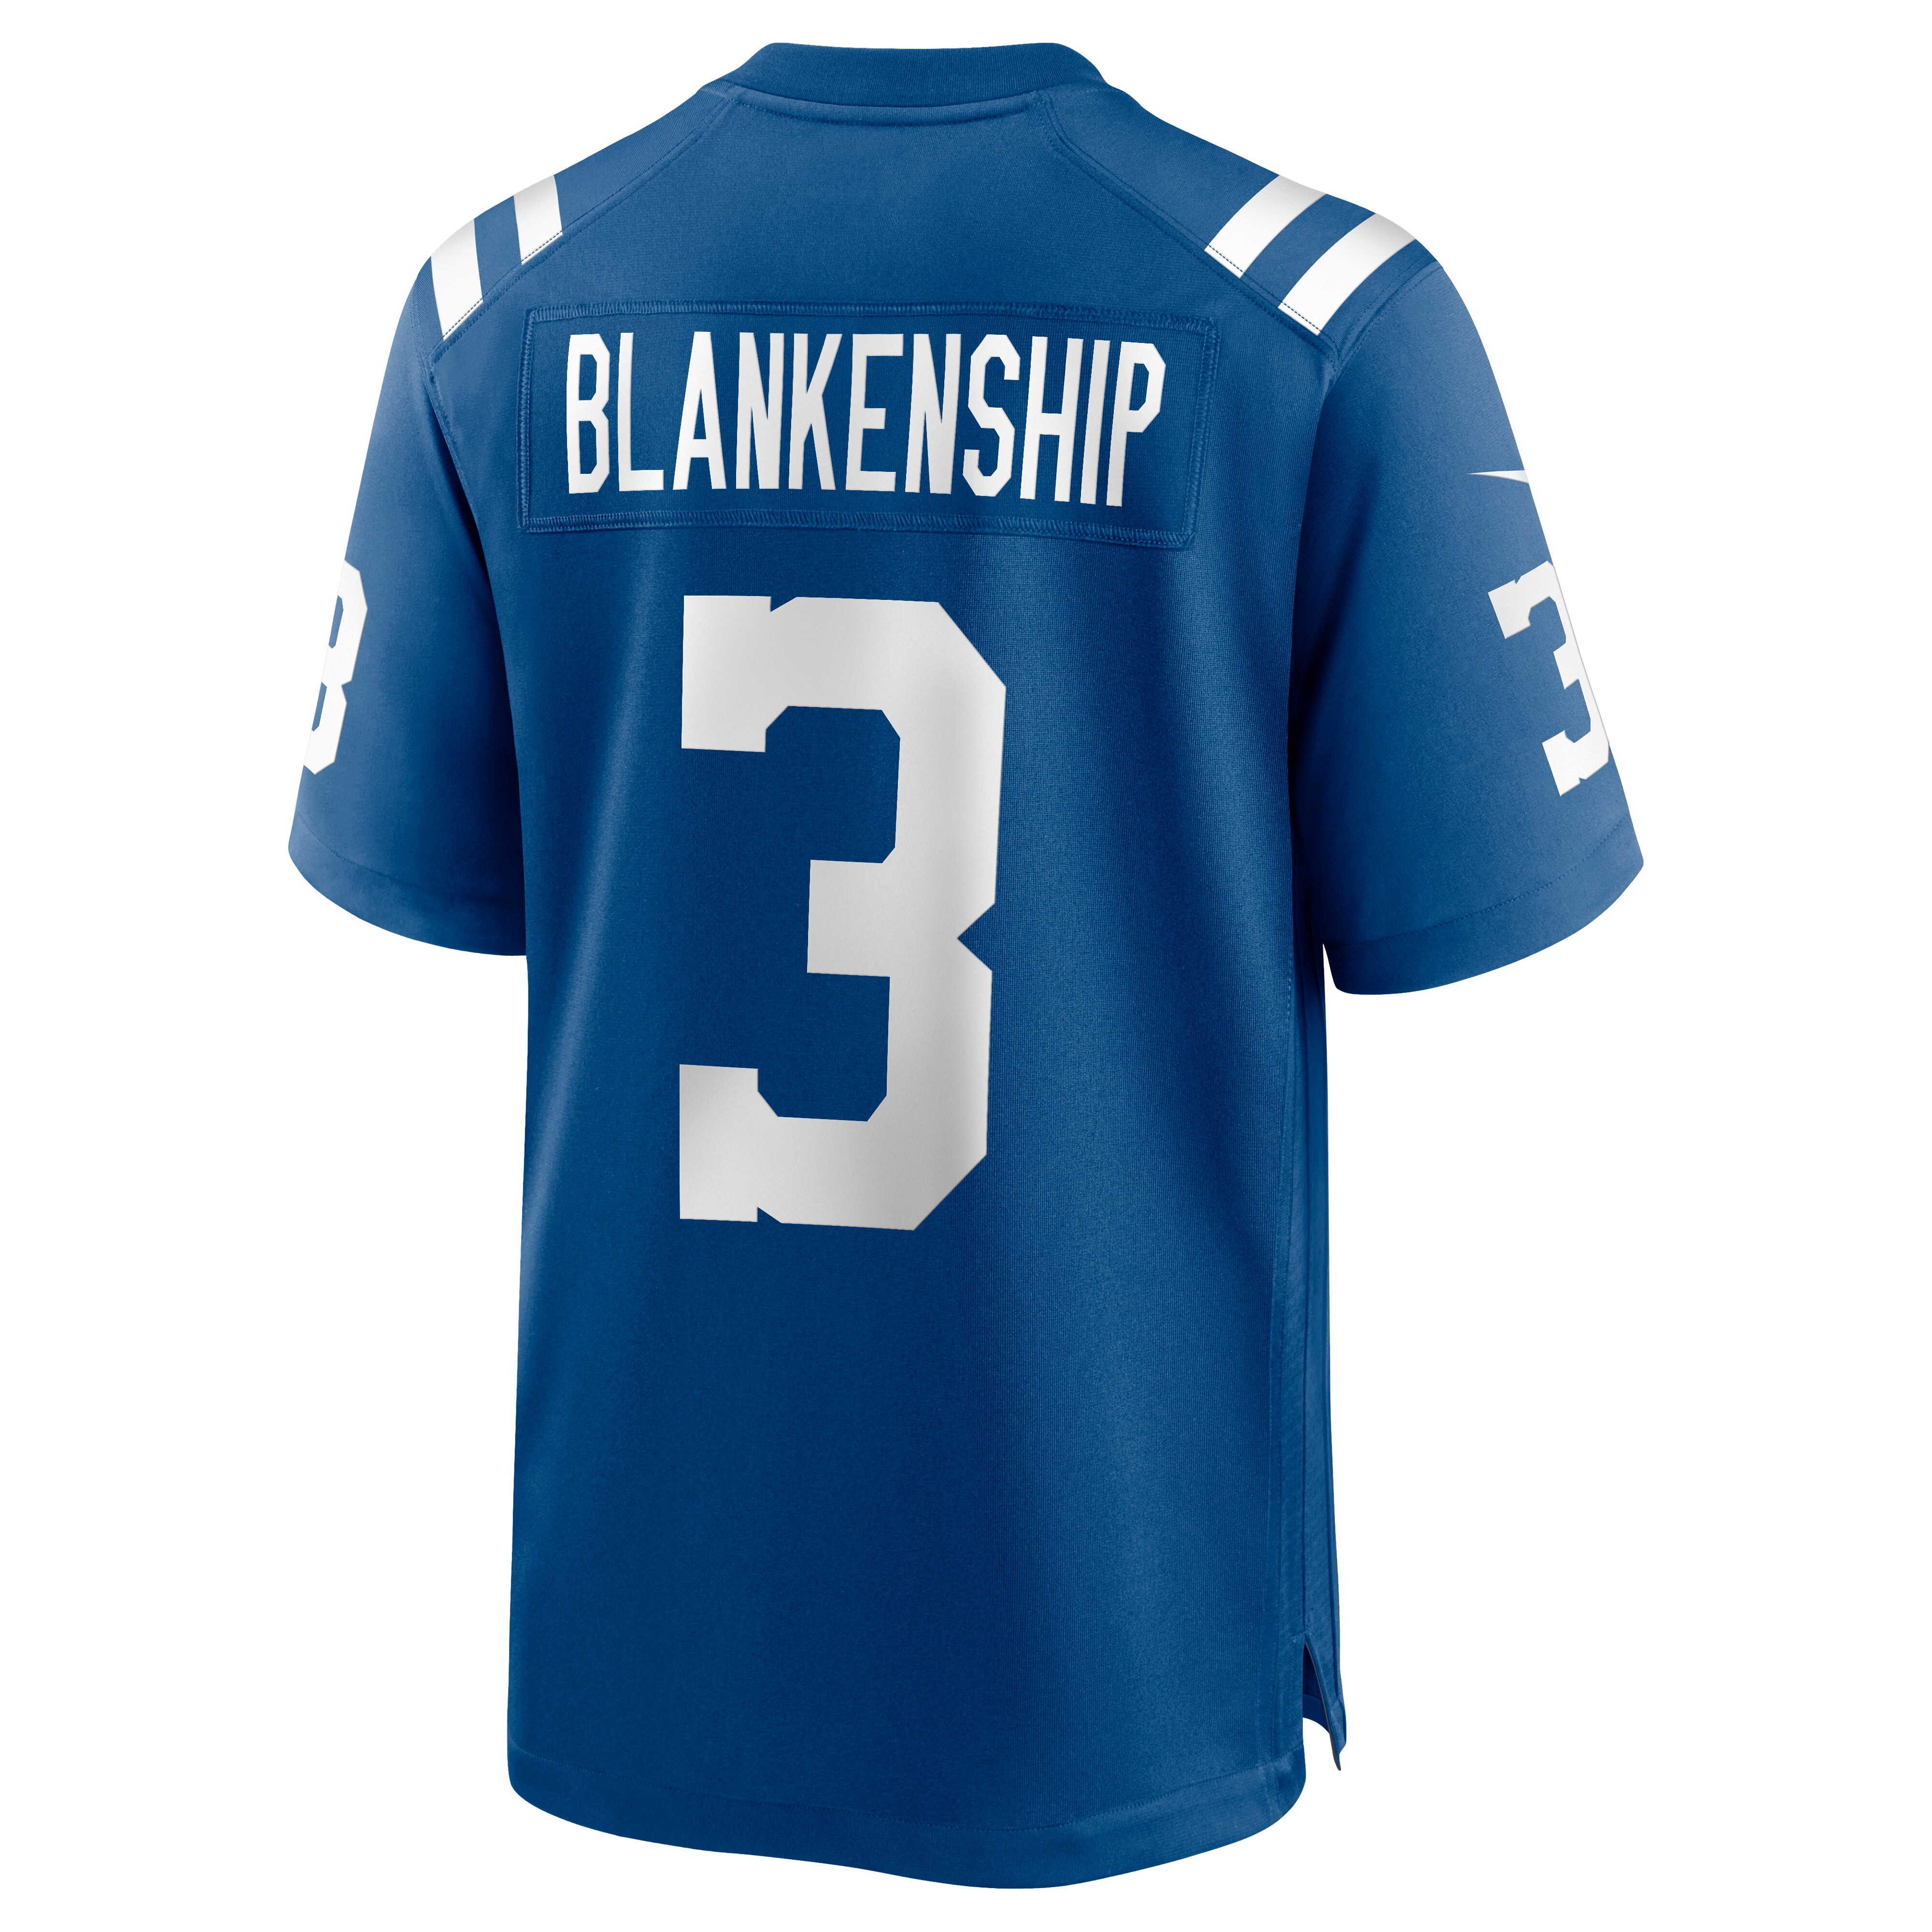 Men's Indianapolis Colts Rodrigo Blankenship Nike Royal Game Jersey